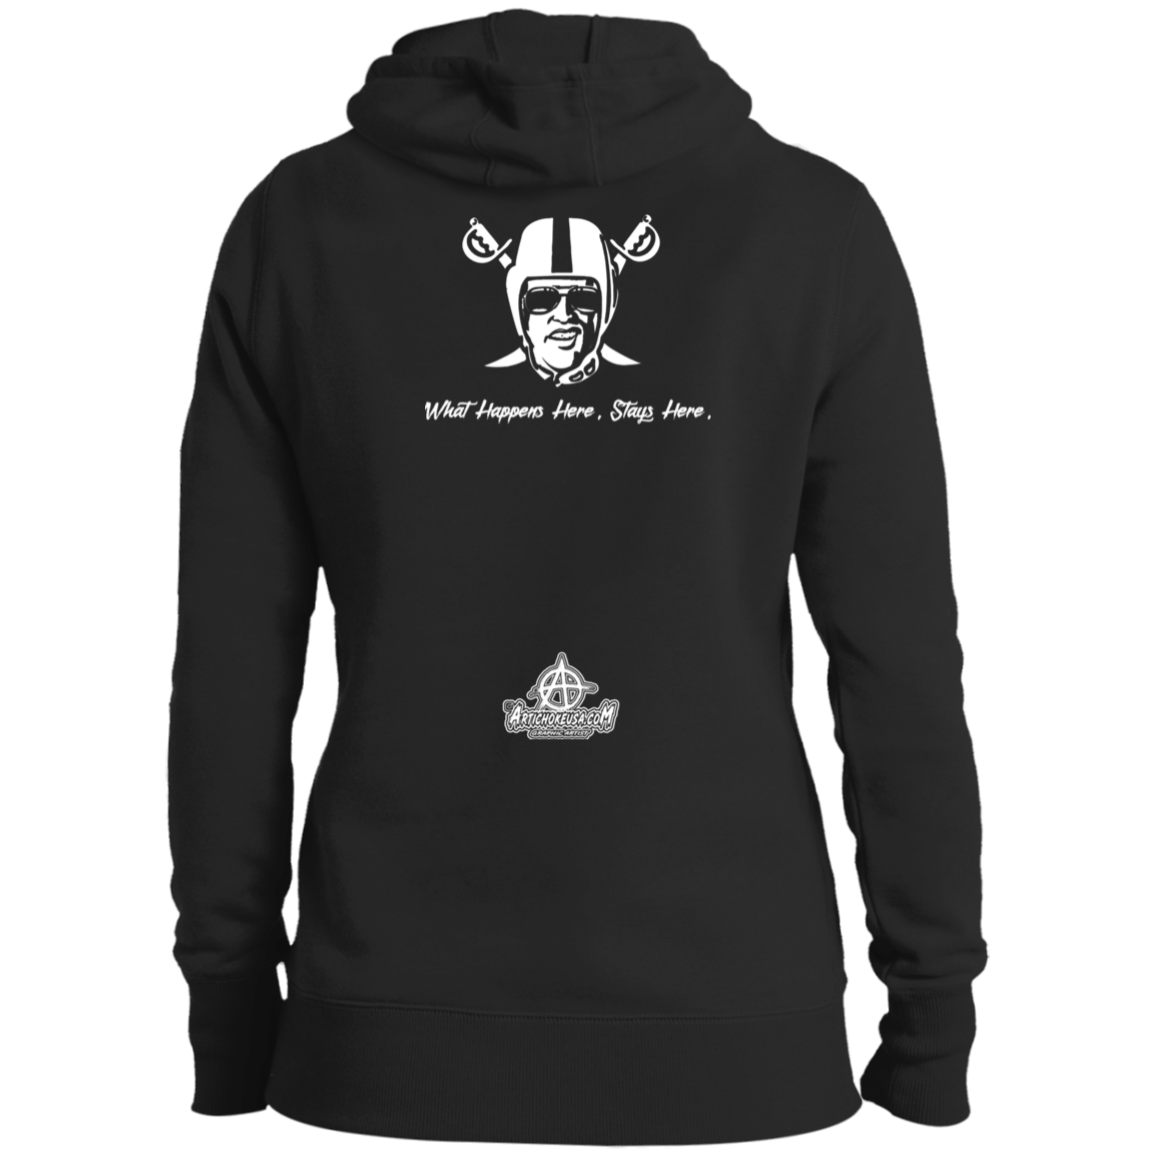 ArtichokeUSA Custom Design. Las Vegas Raiders. Las Vegas / Elvis Presley Parody Fan Art. Let's Create Your Own Team Design Today. Ladies' Pullover Hooded Sweatshirt